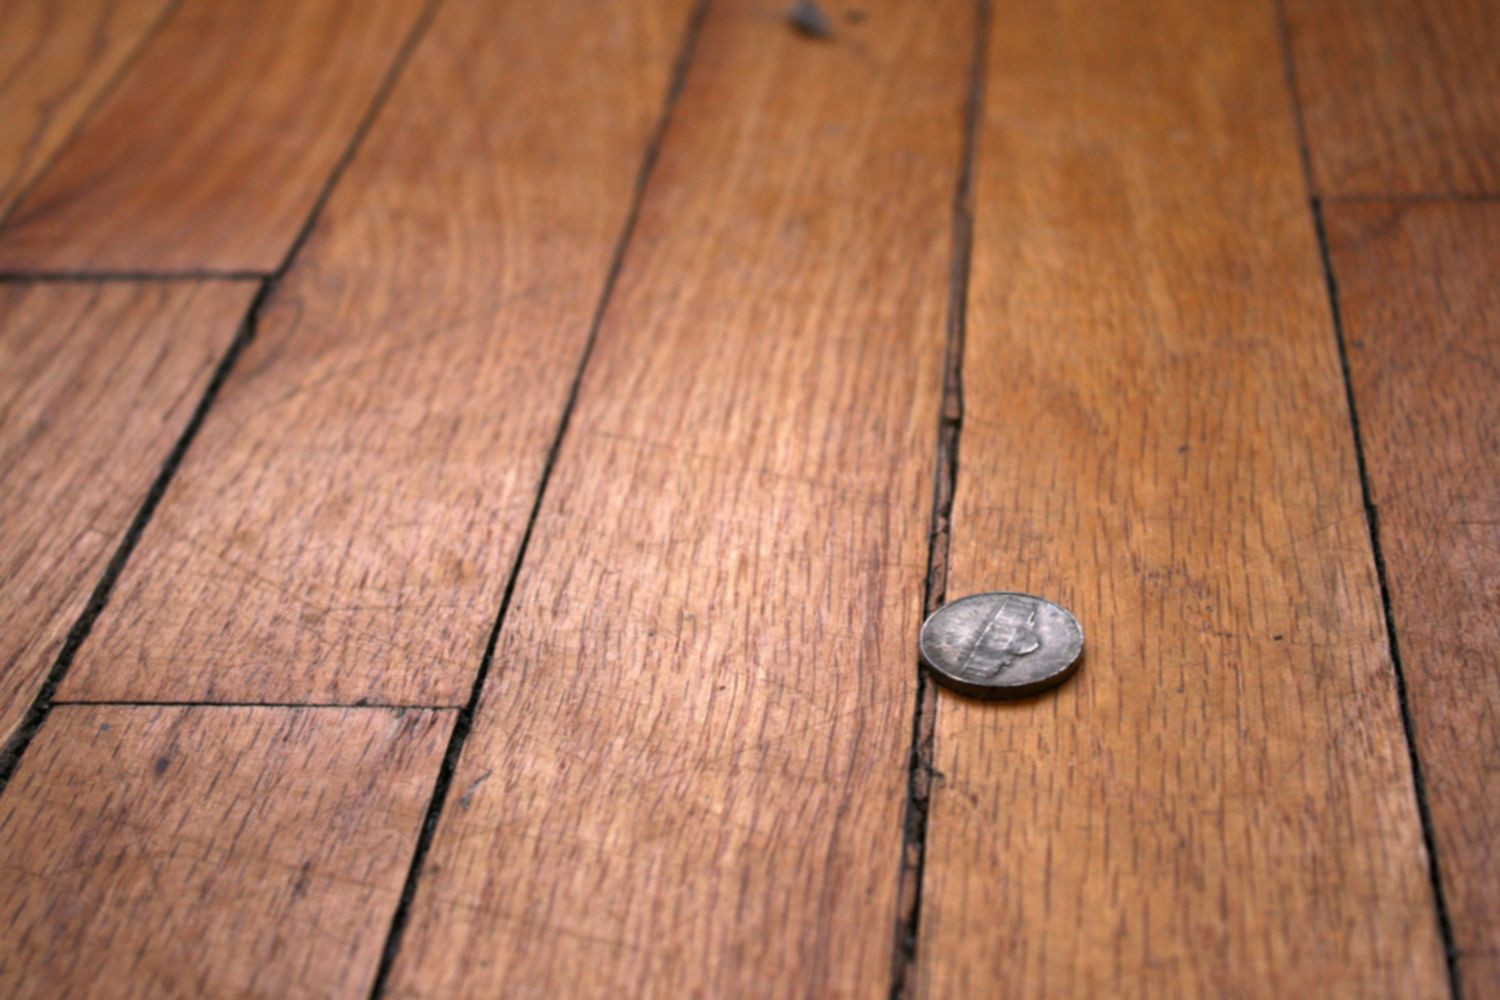 v groove hardwood flooring of how to repair gaps between floorboards in wood floor with gaps between boards 1500 x 1000 56a49eb25f9b58b7d0d7df8d